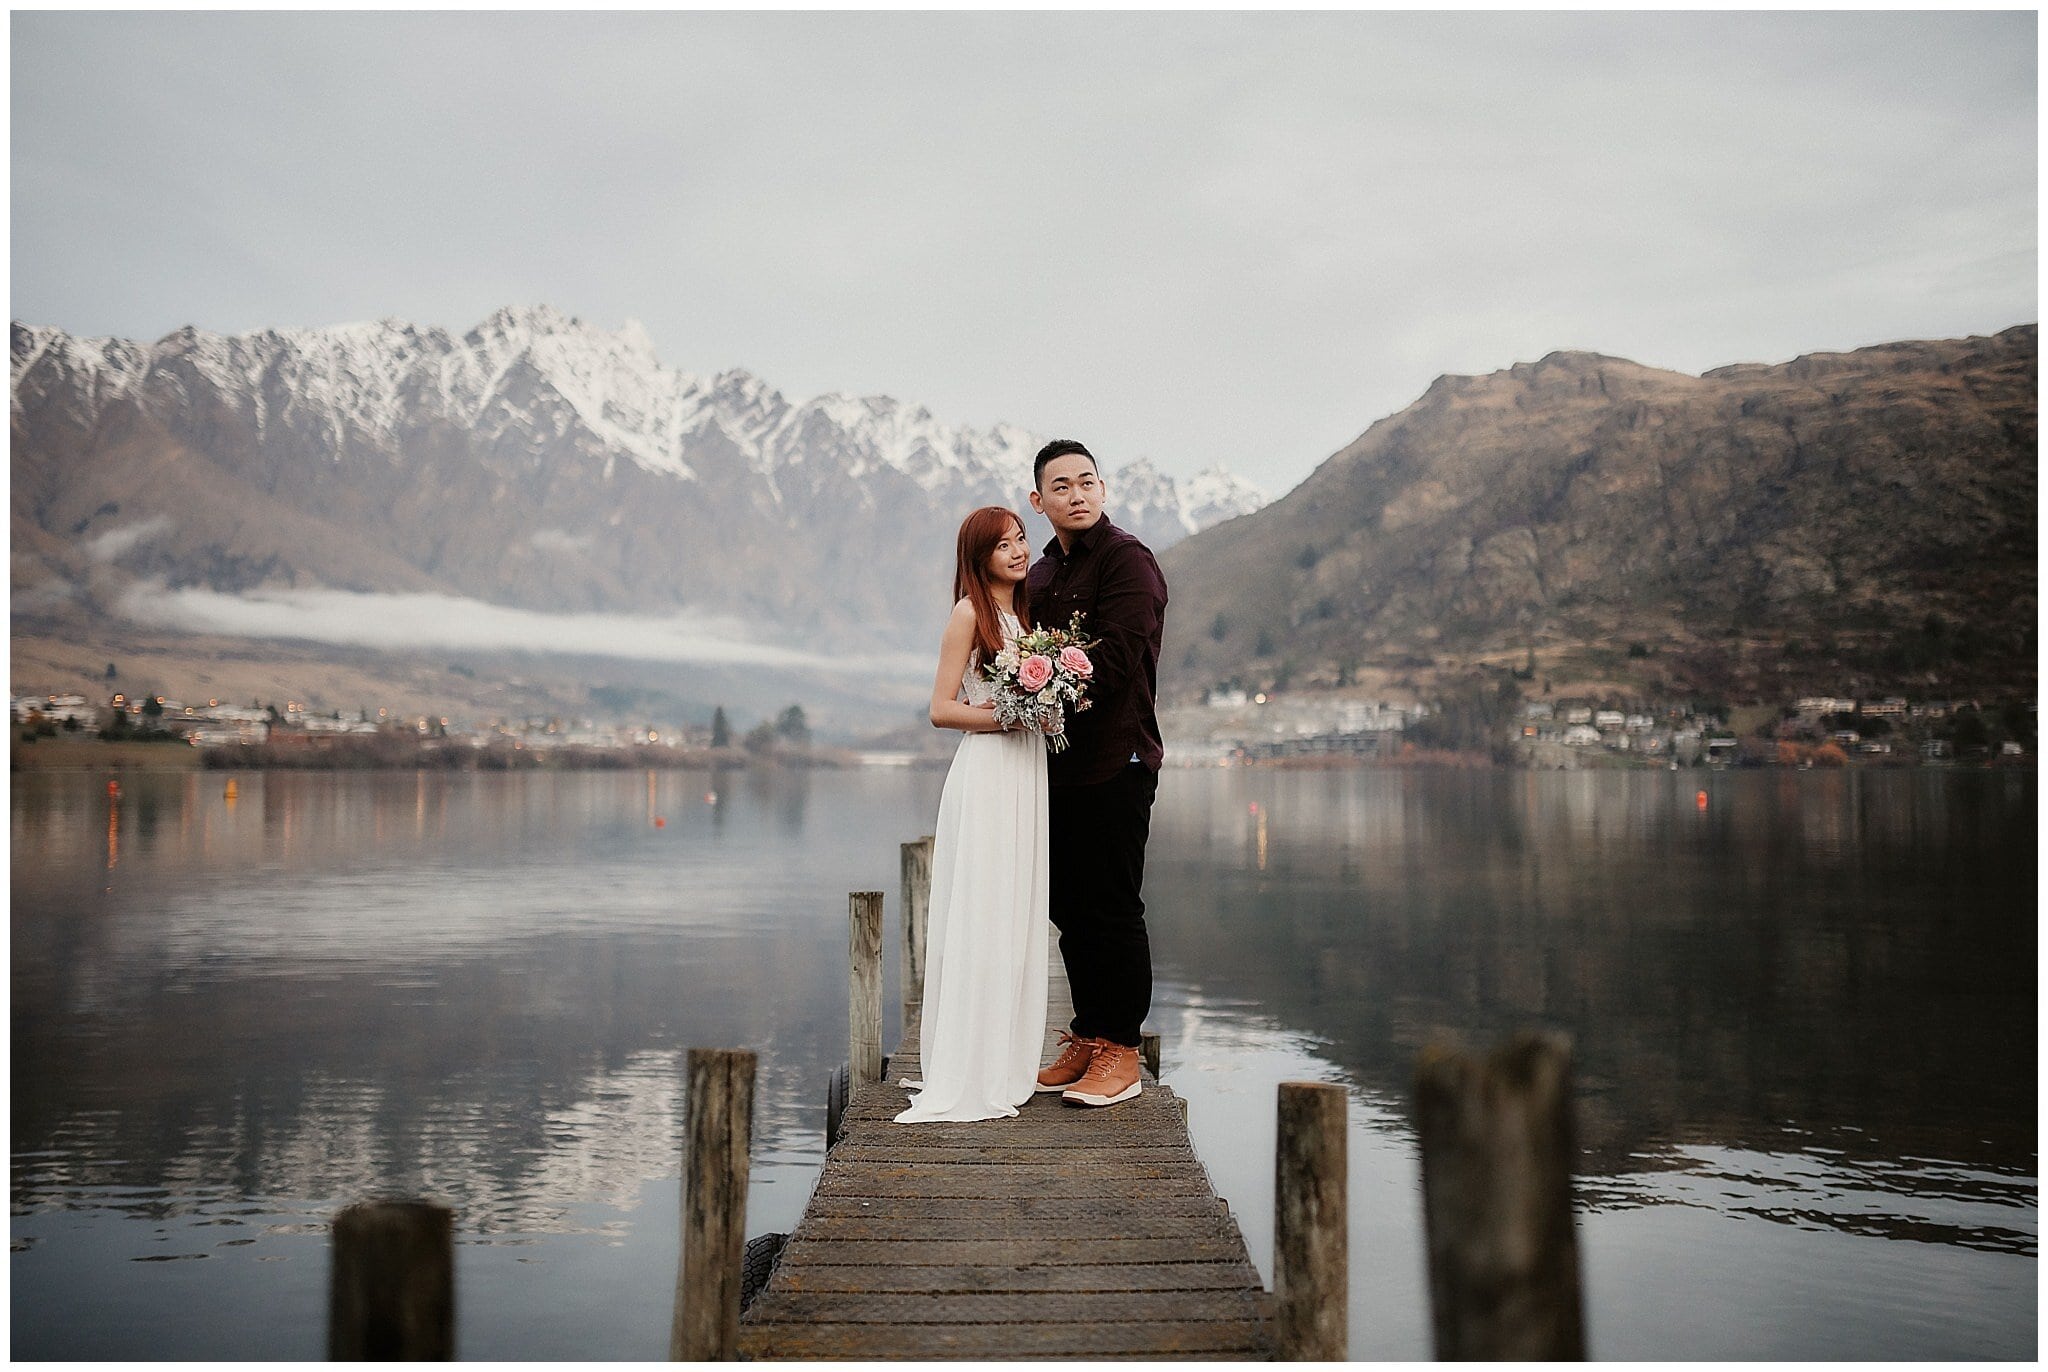 Adison & Vivian's Queenstown NZ Proposal + Engagement Shoot